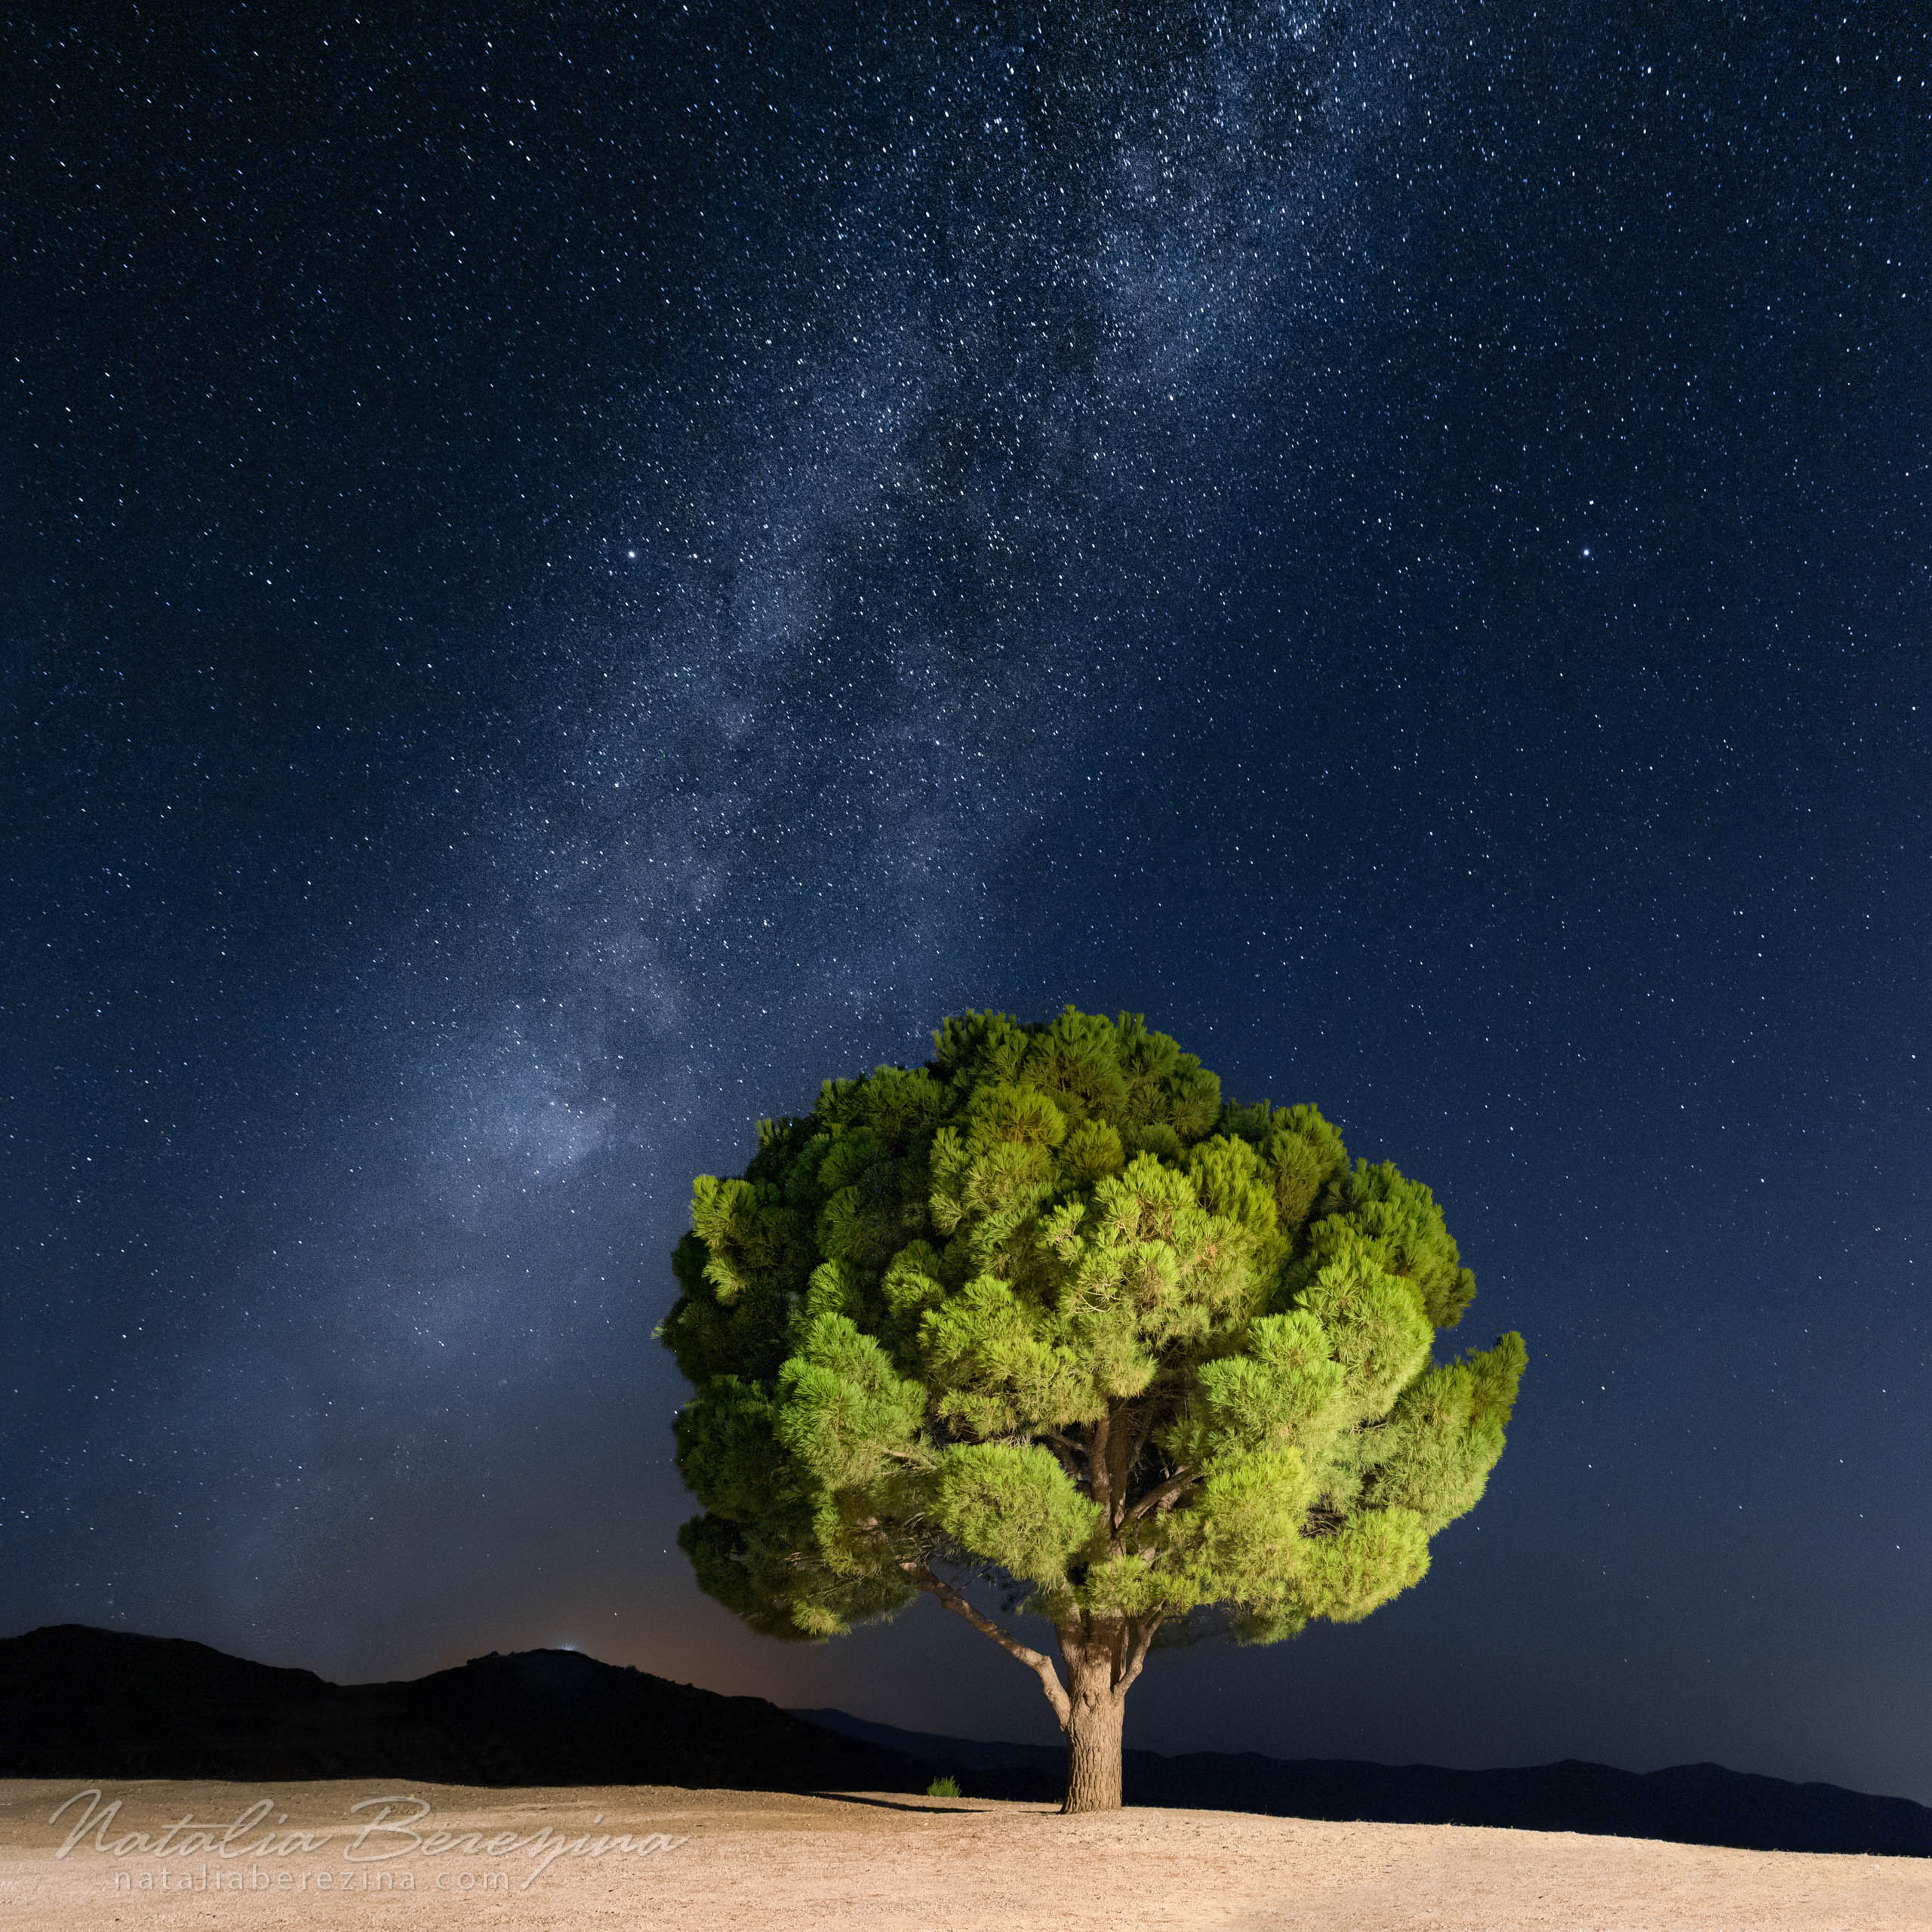 Greece, Crete, night time, star sky, Milky Way, tree, 1x1 CR1-NBDK1U9505 - Crete, Greece - Natalia Berezina Photography